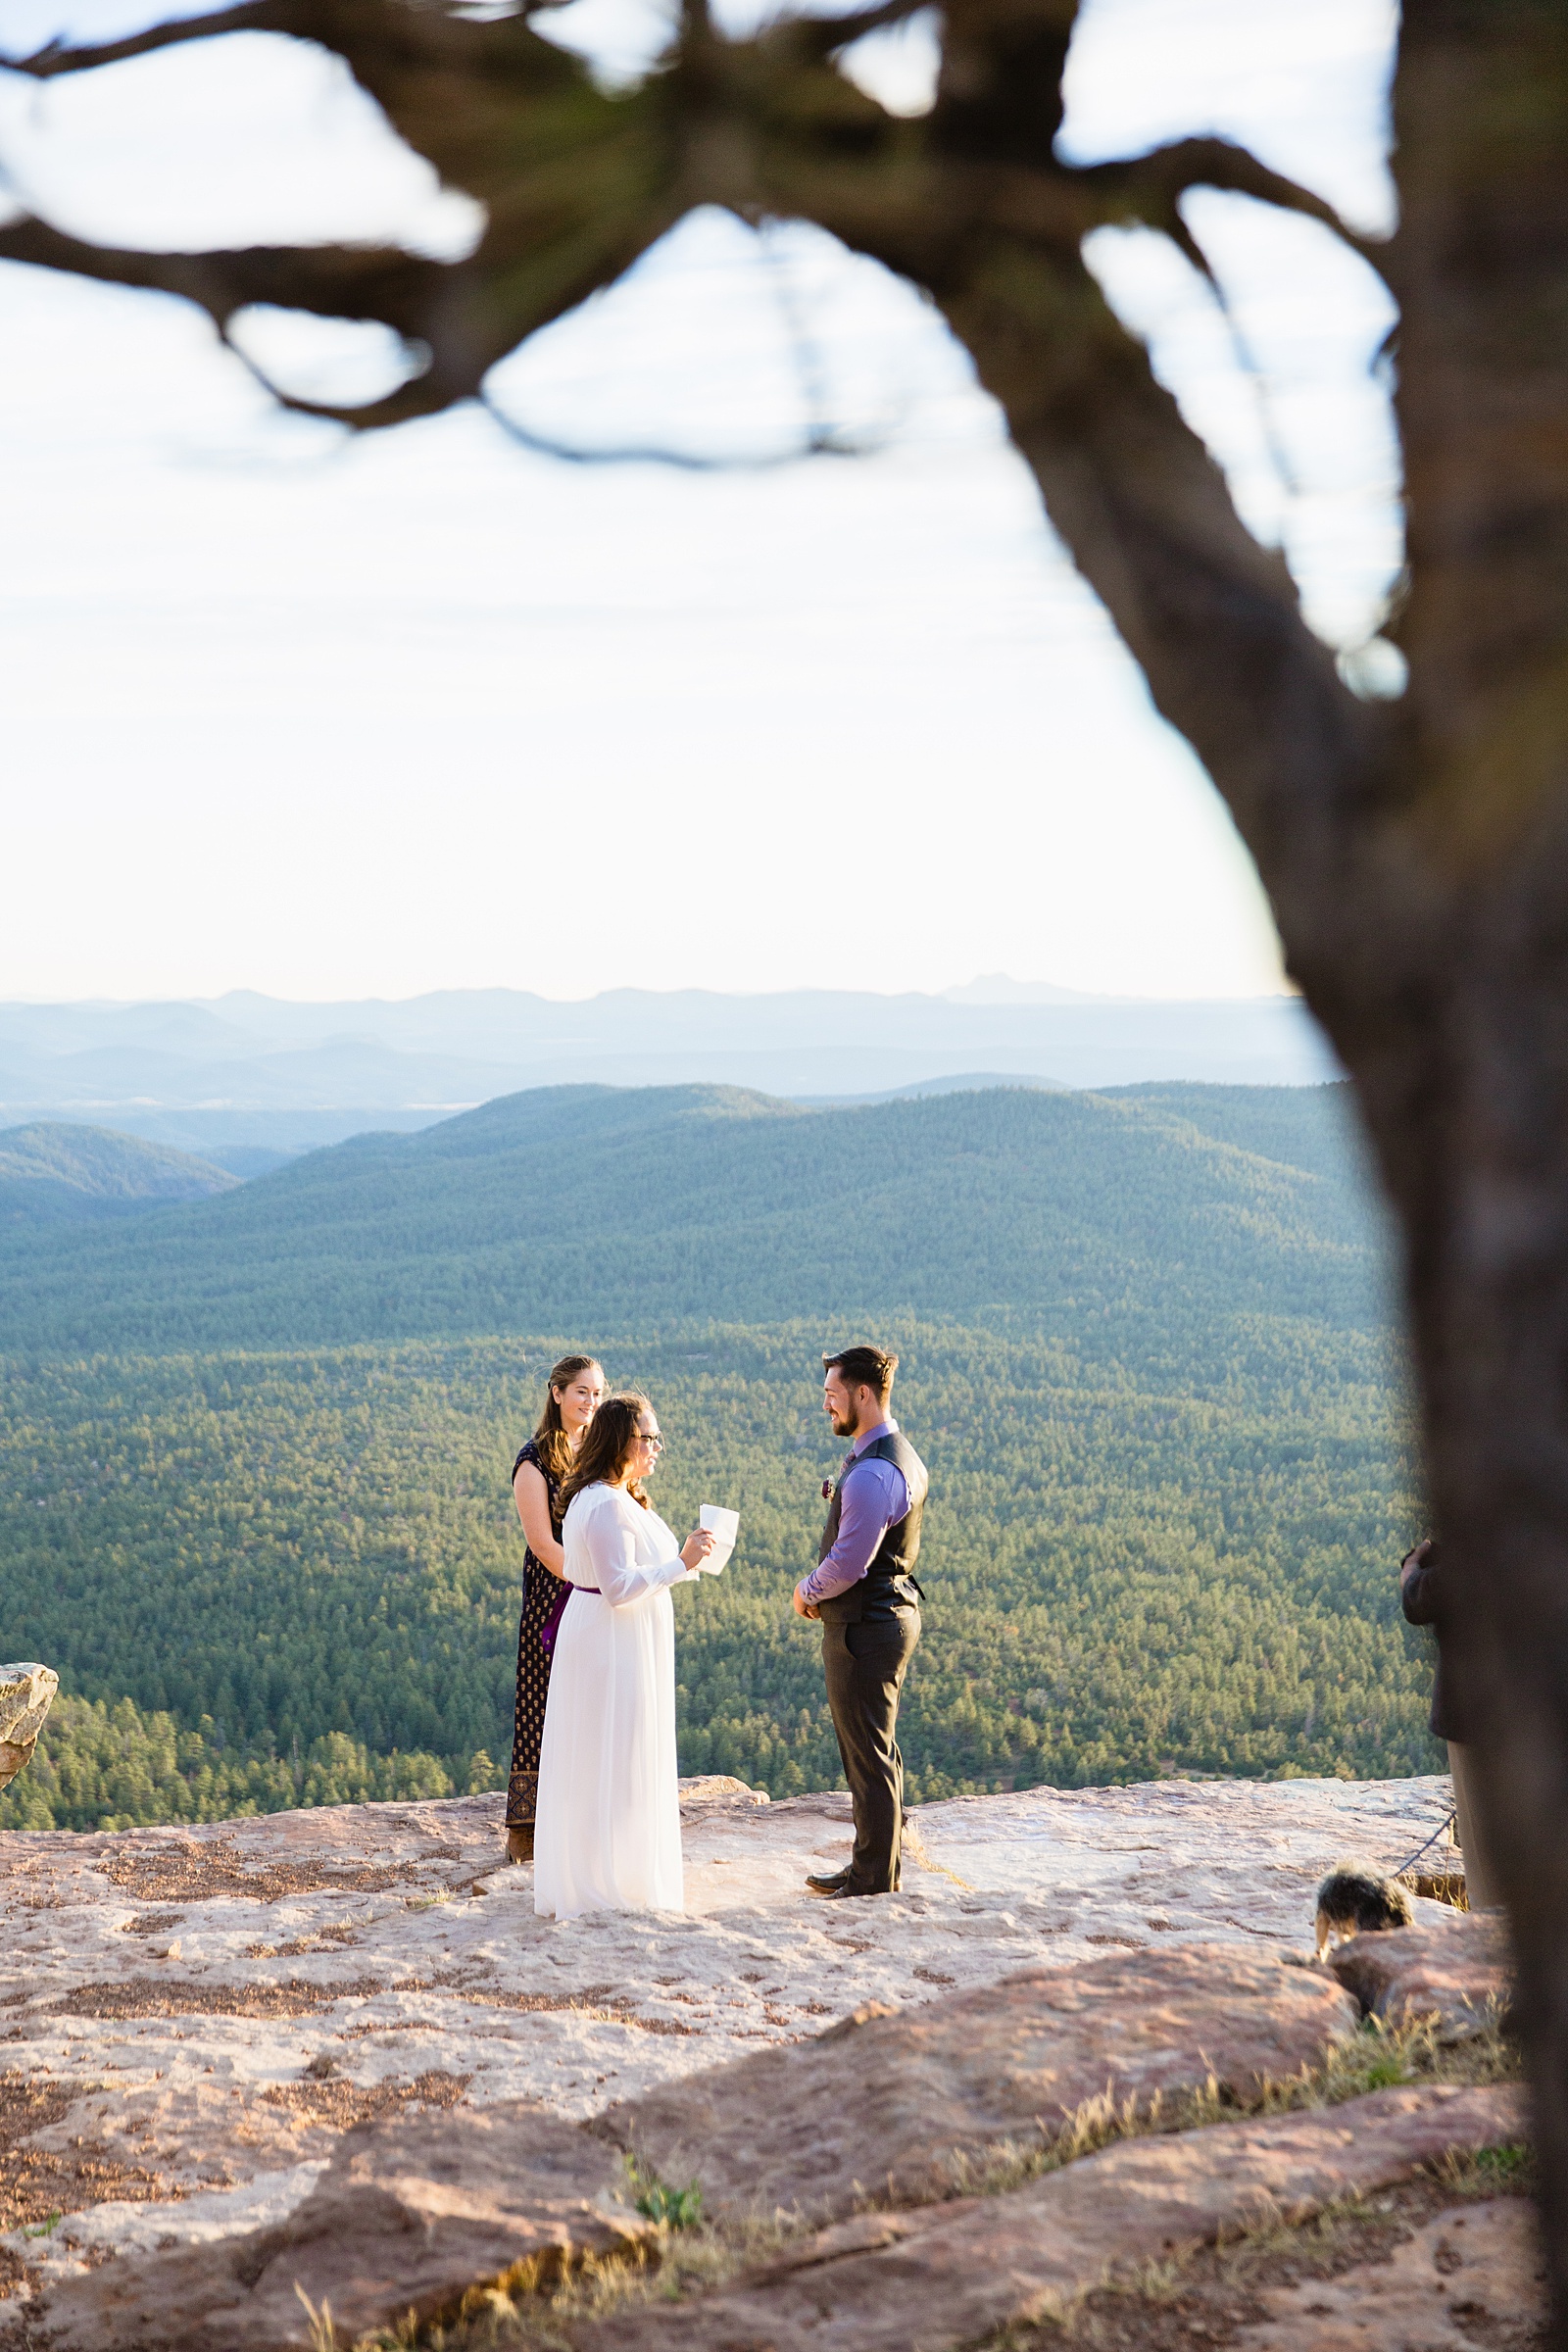 Epic wedding ceremony at Mogollon Rim by Arizona elopement photographer PMA Photography.